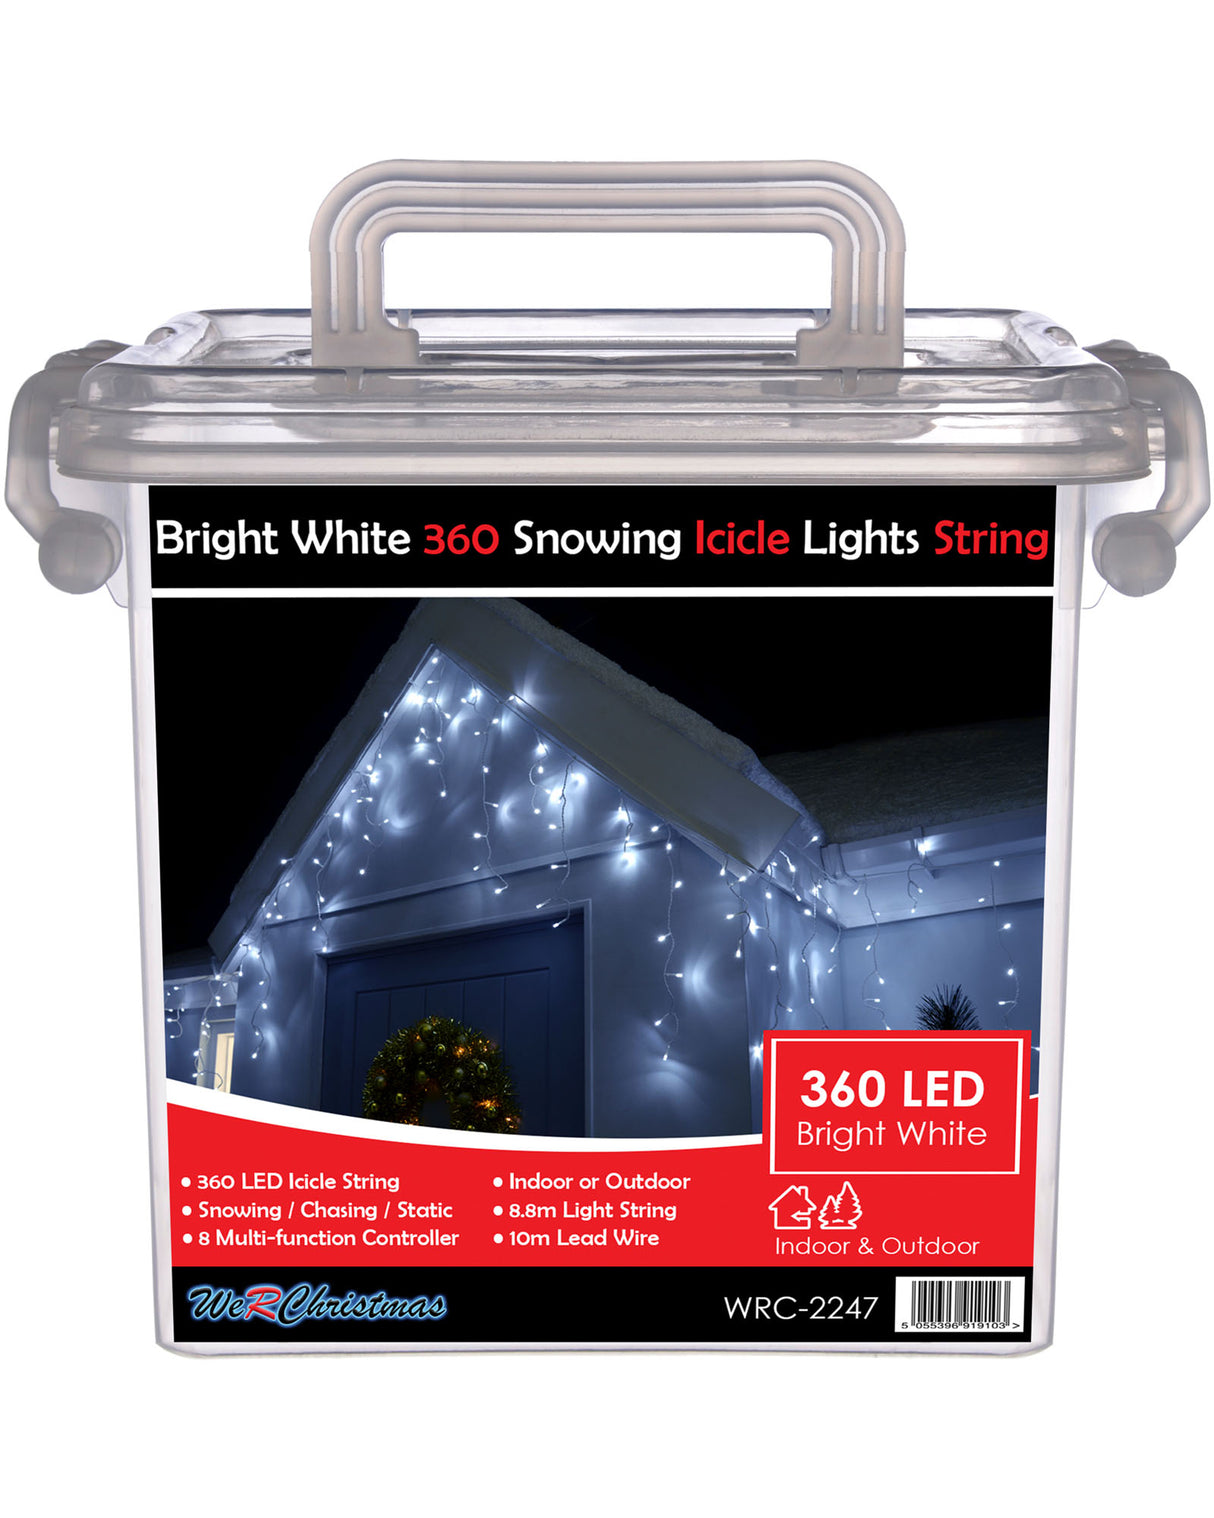 360 Icicle LED Light String, Bright White, 8.8 m